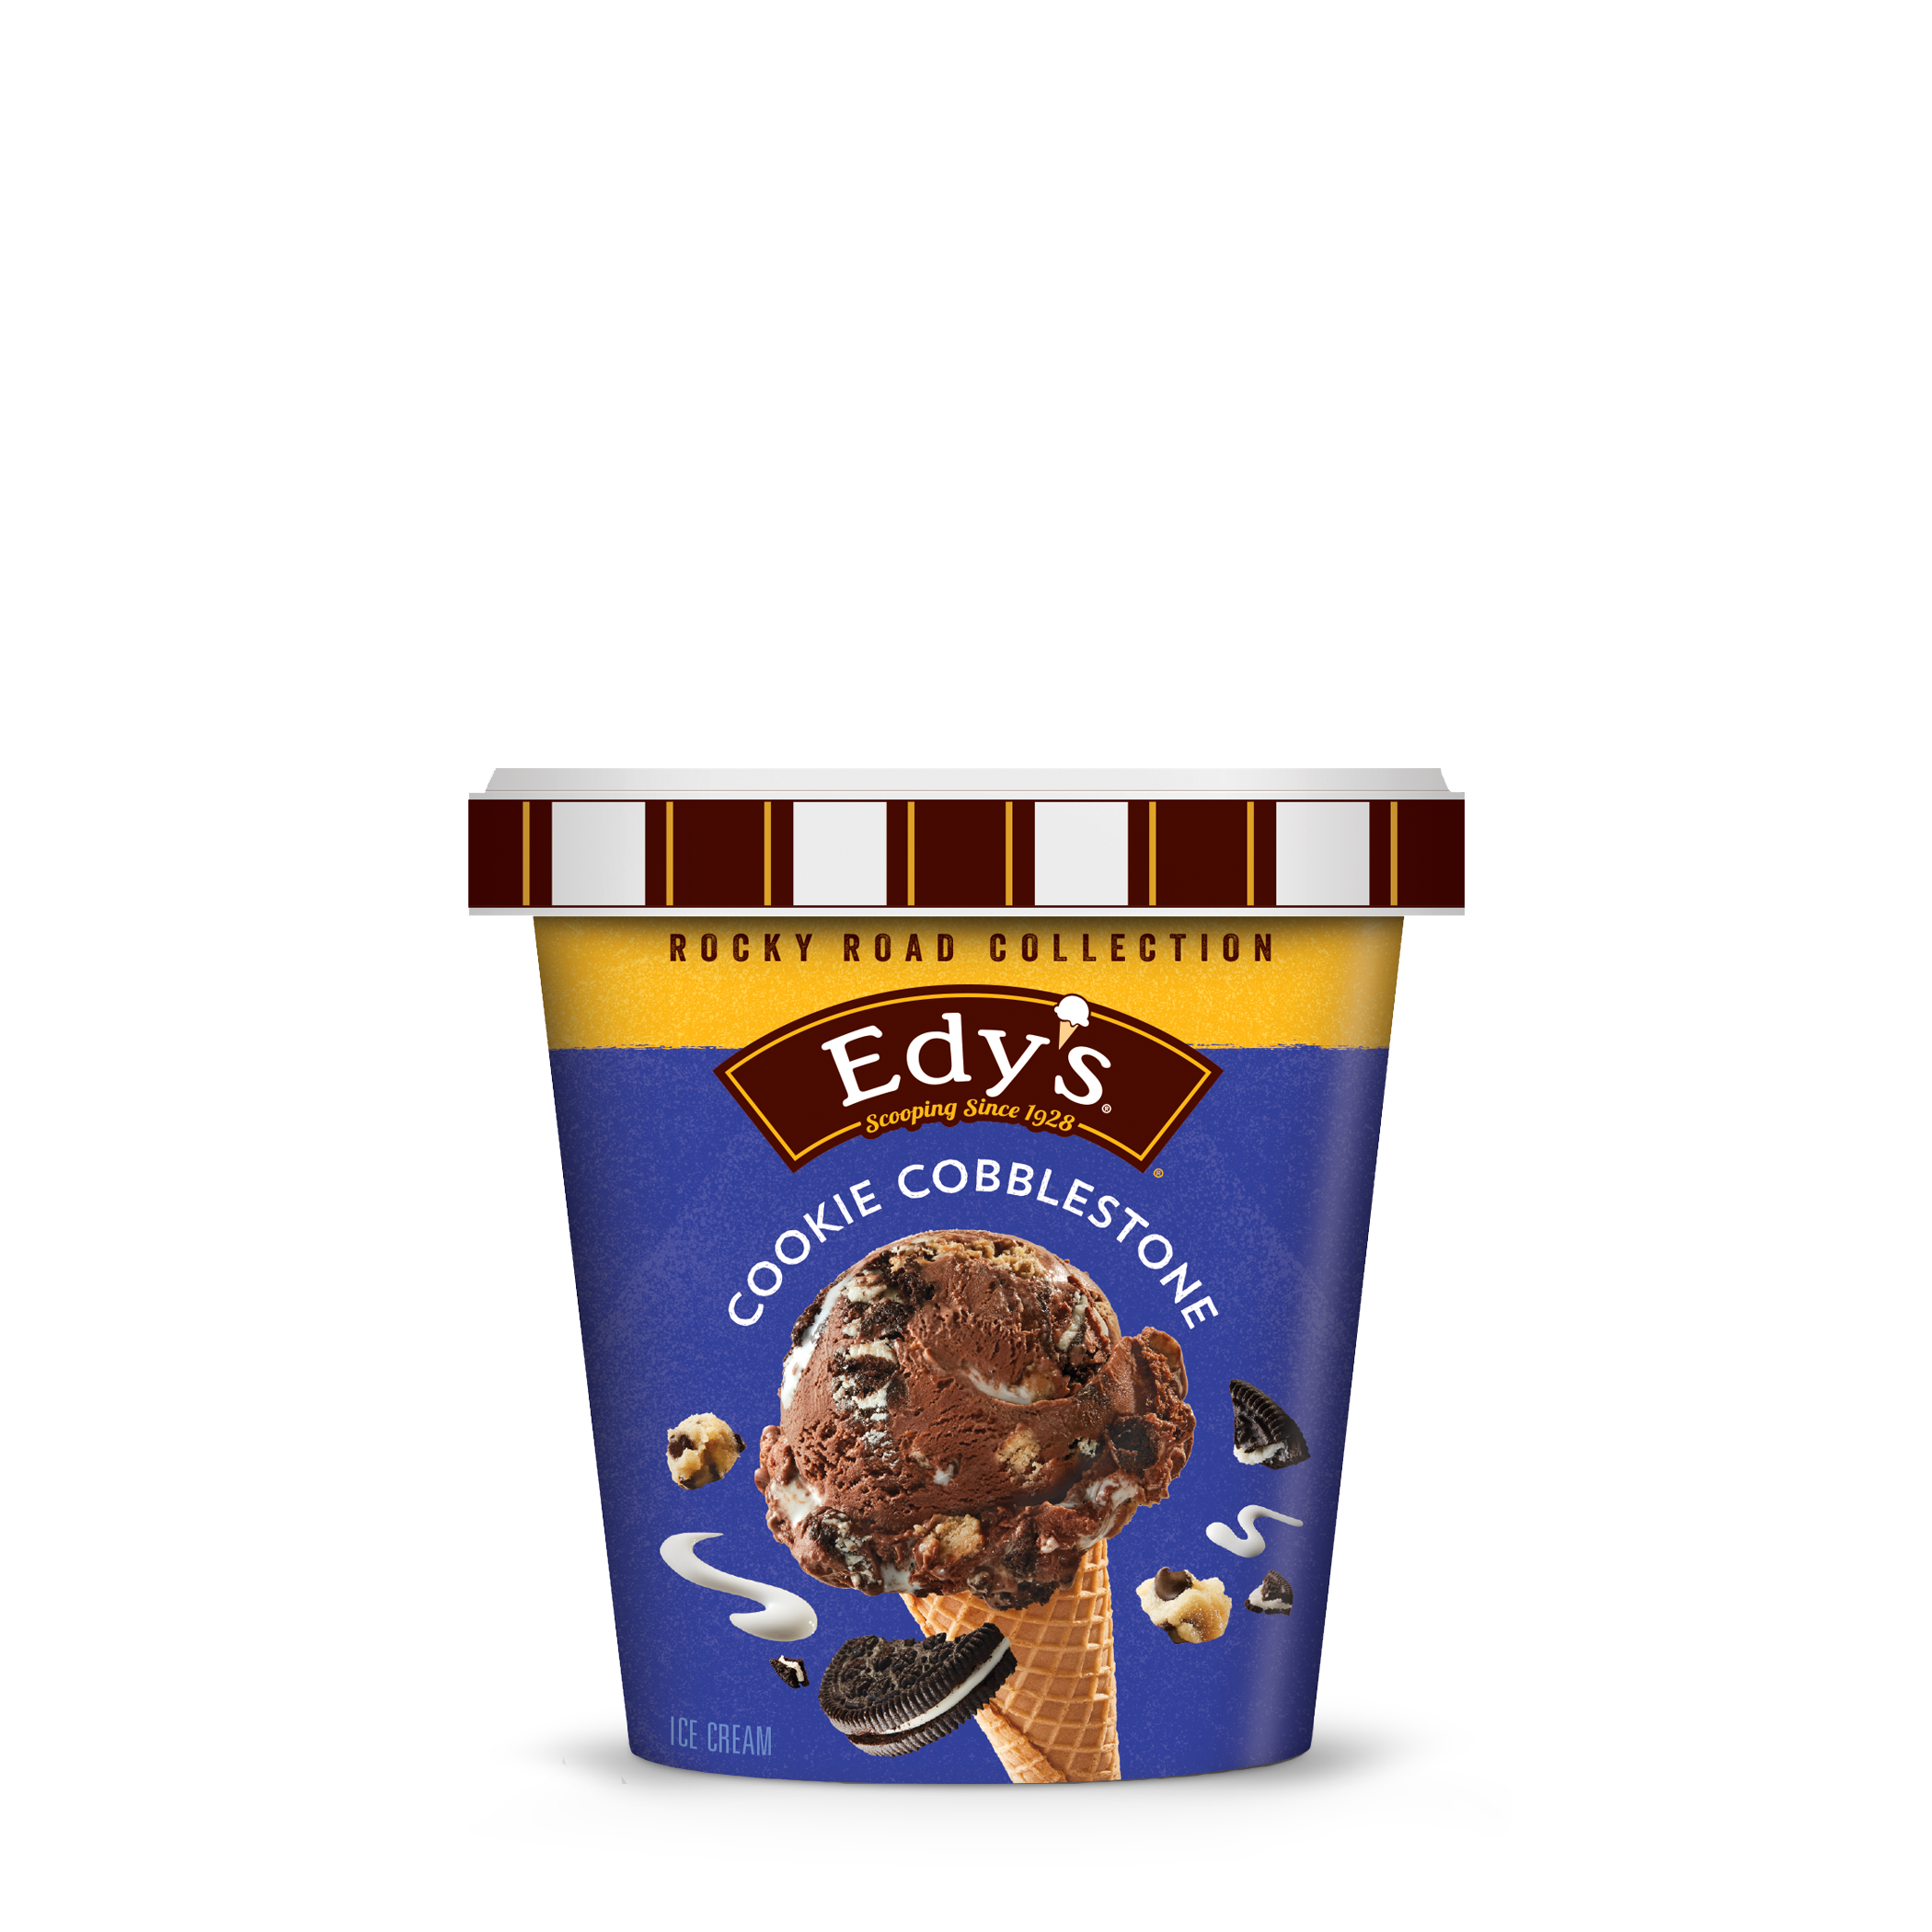 Carton of Edy's Cookie Cobblestone ice cream